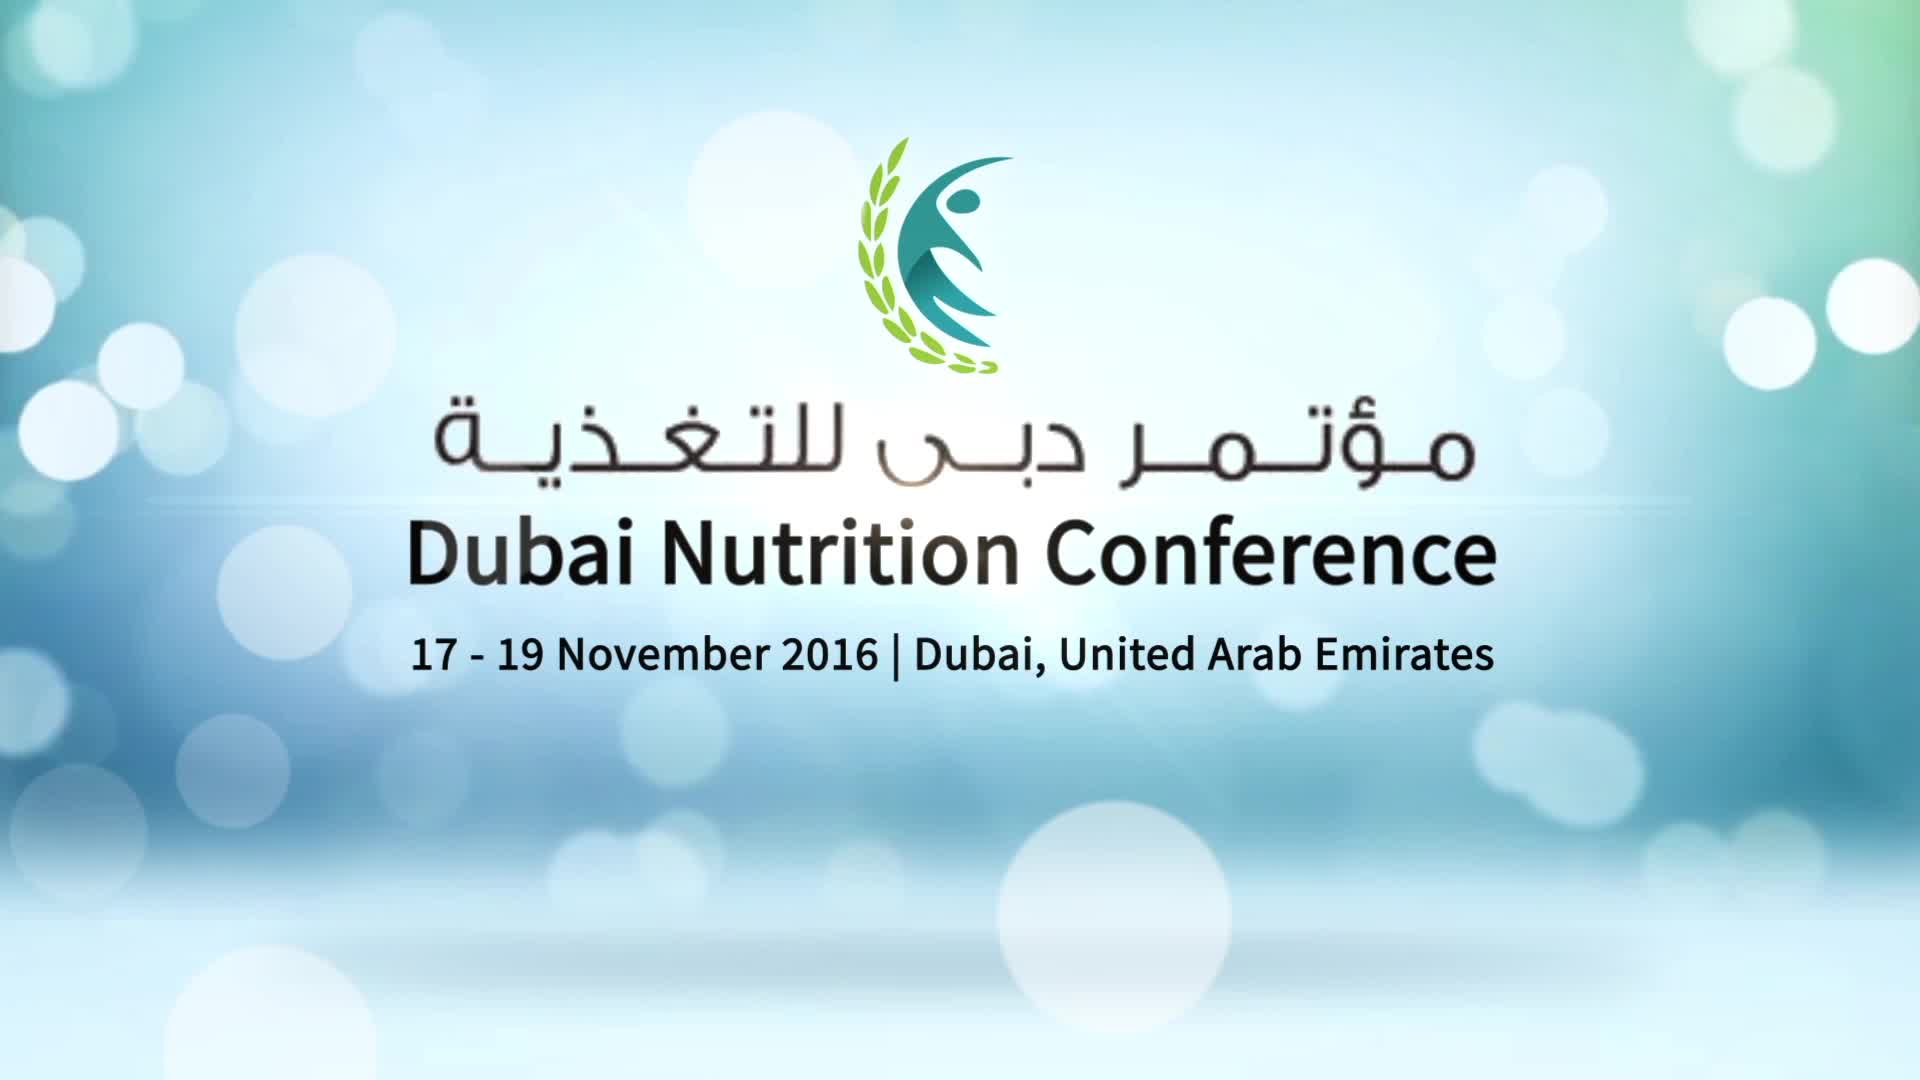 Dubai Nutrition Conference 2016